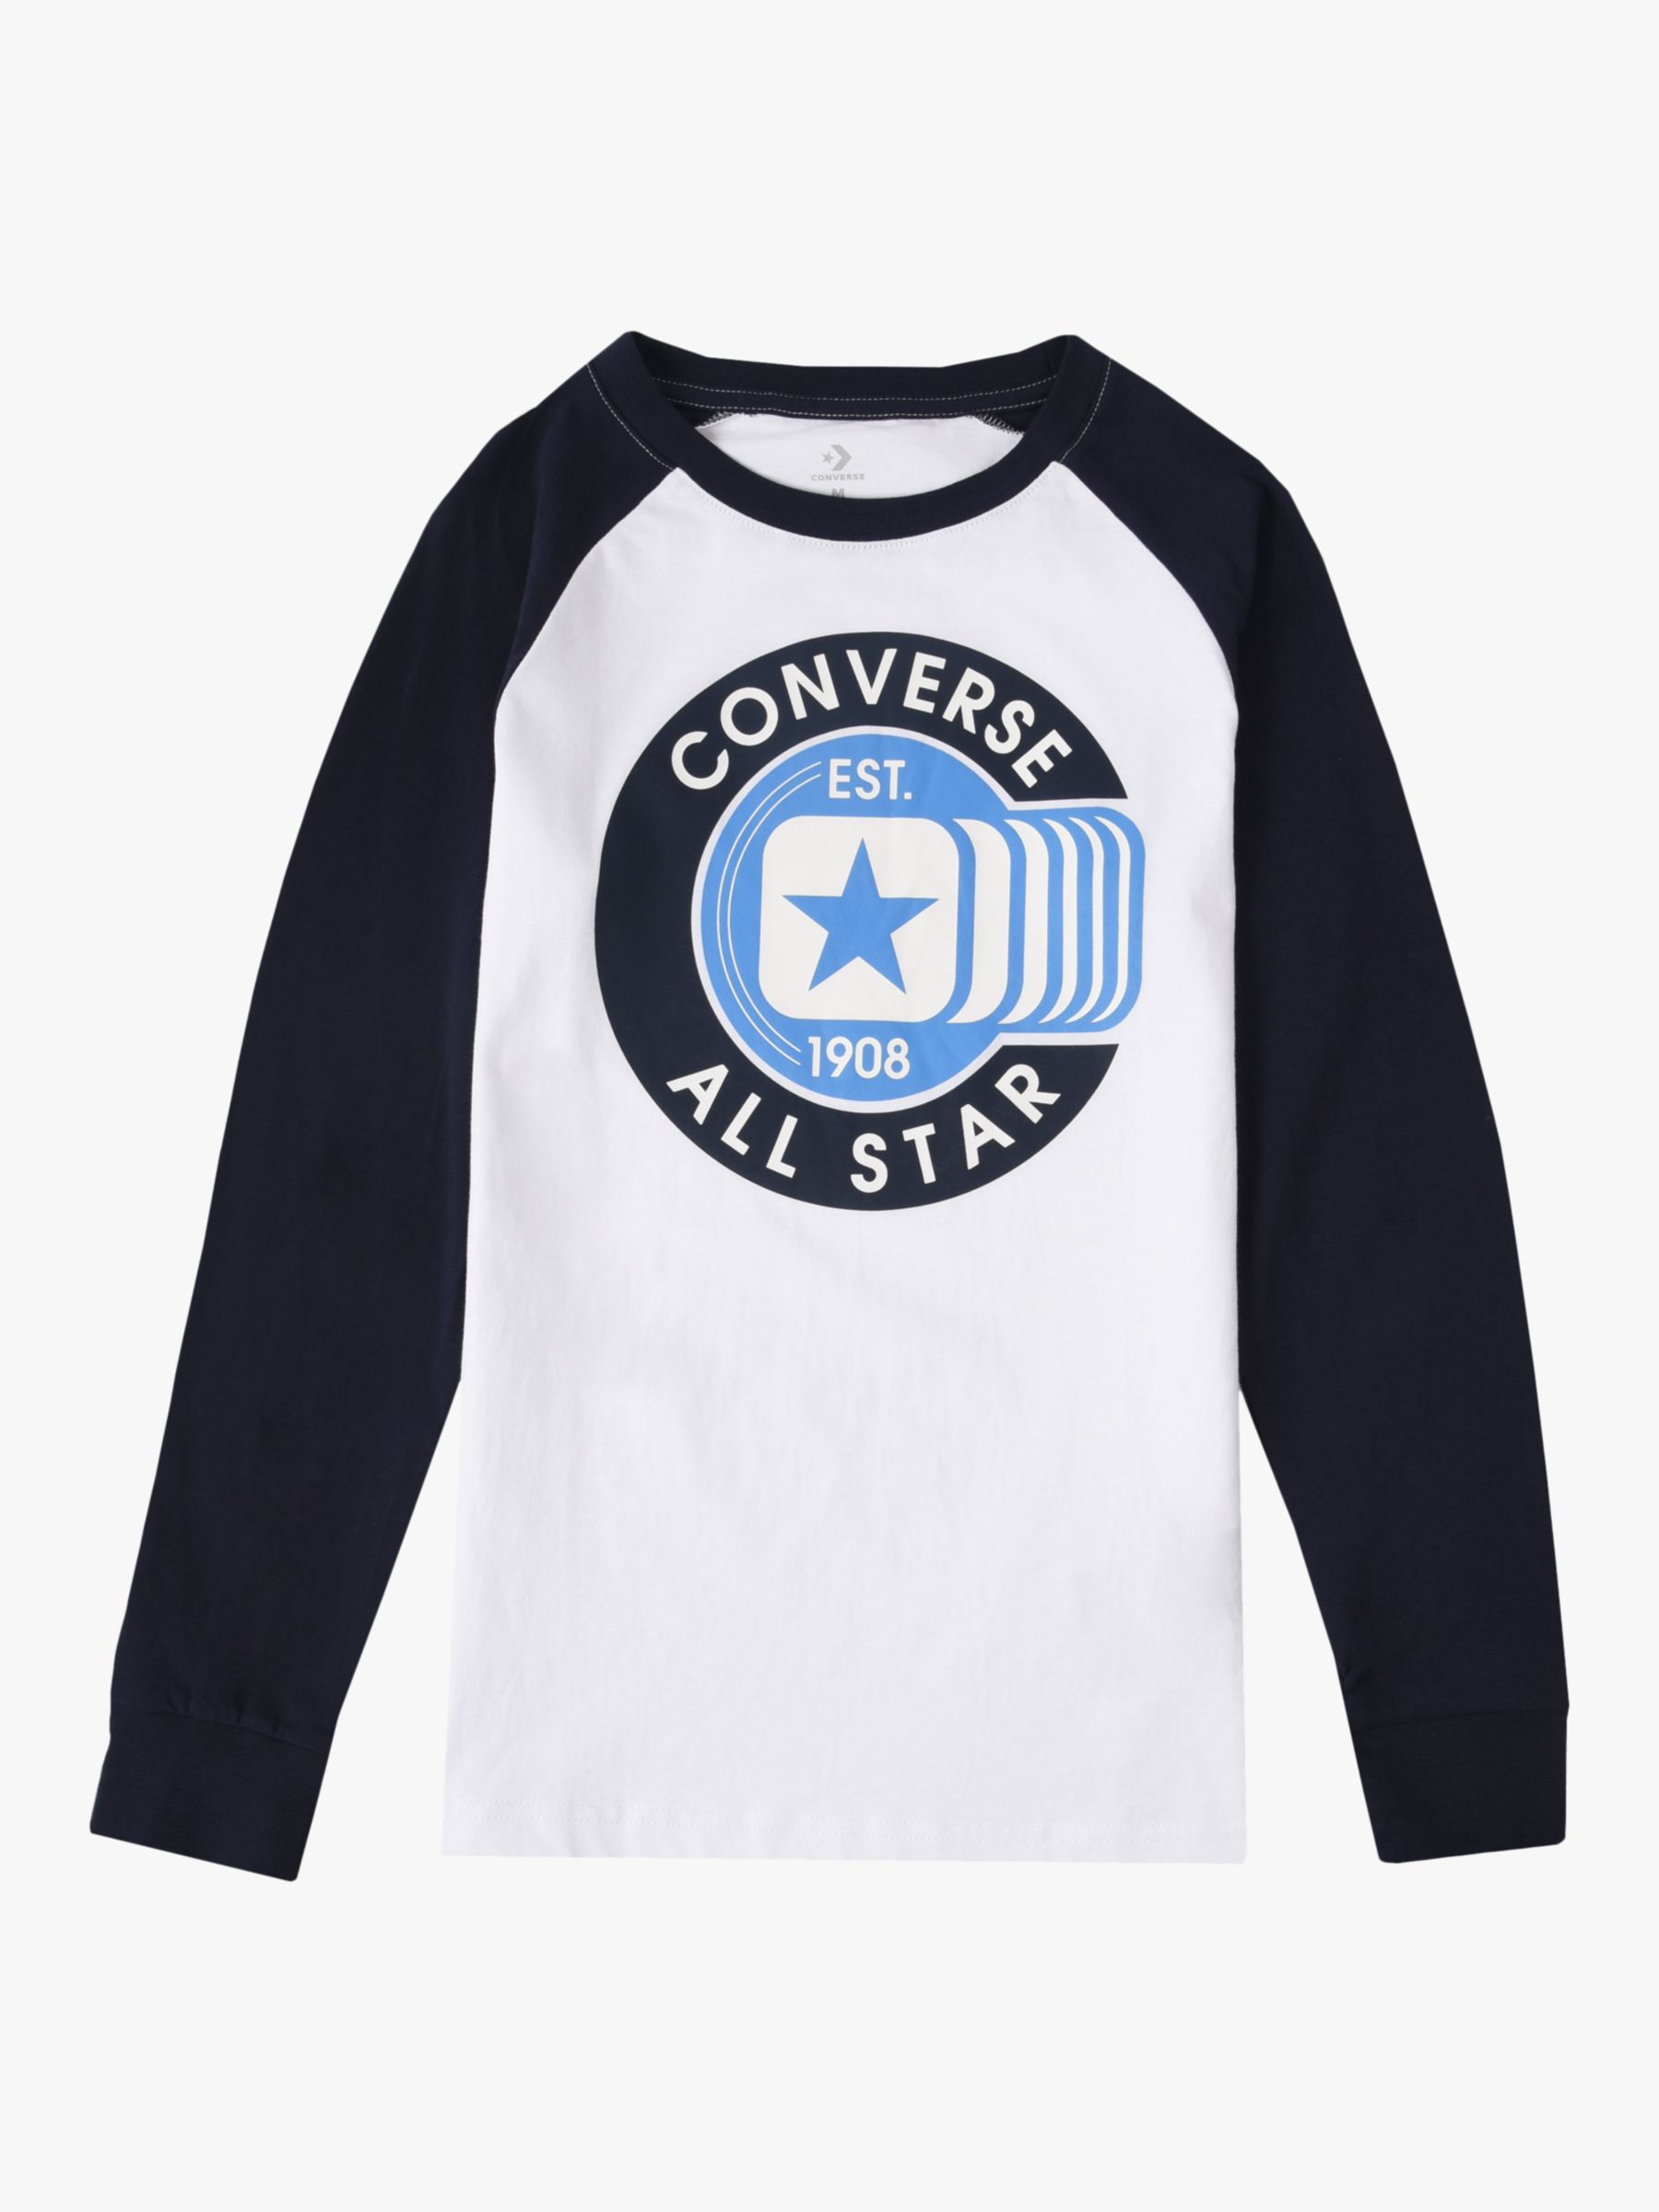 converse all star t shirt blue